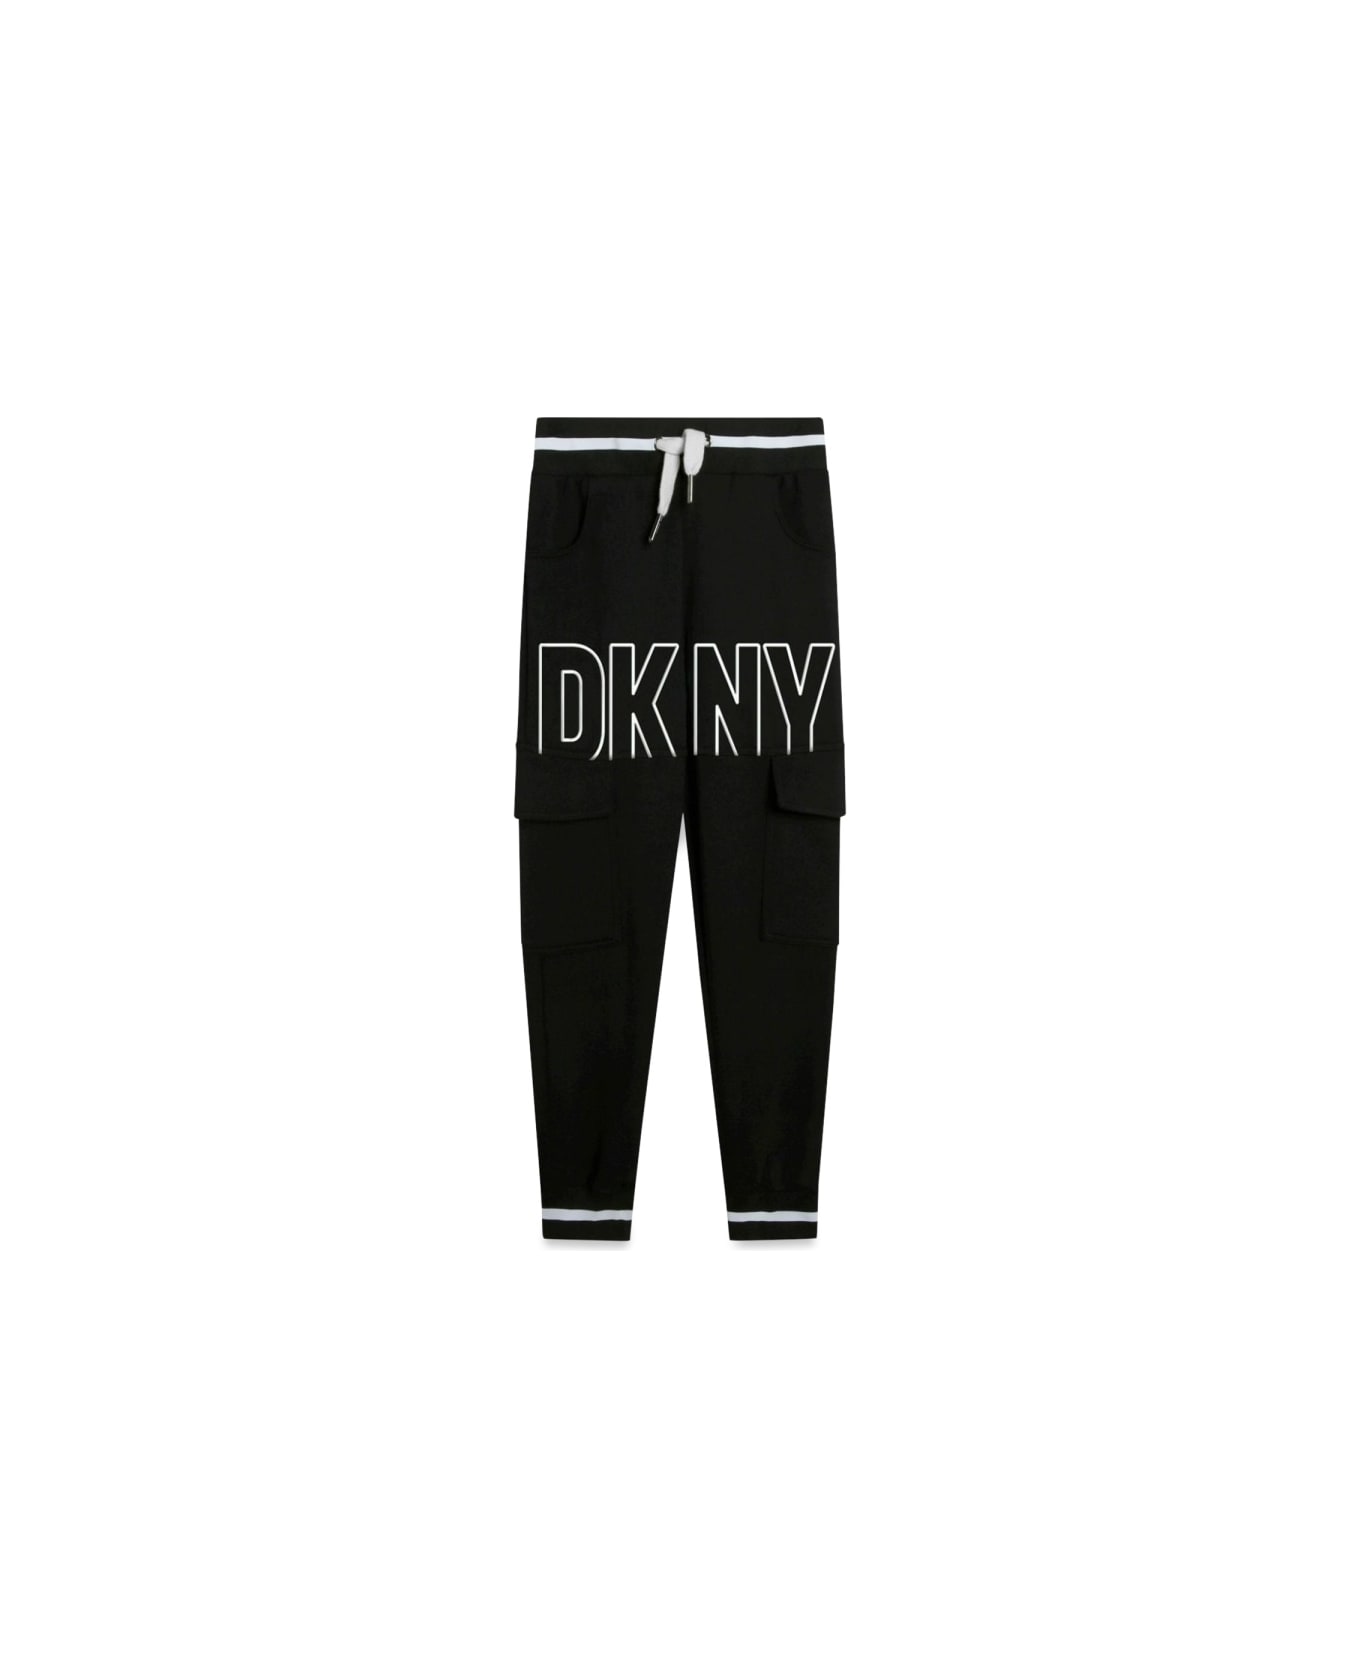 DKNY Pants - BLACK ボトムス